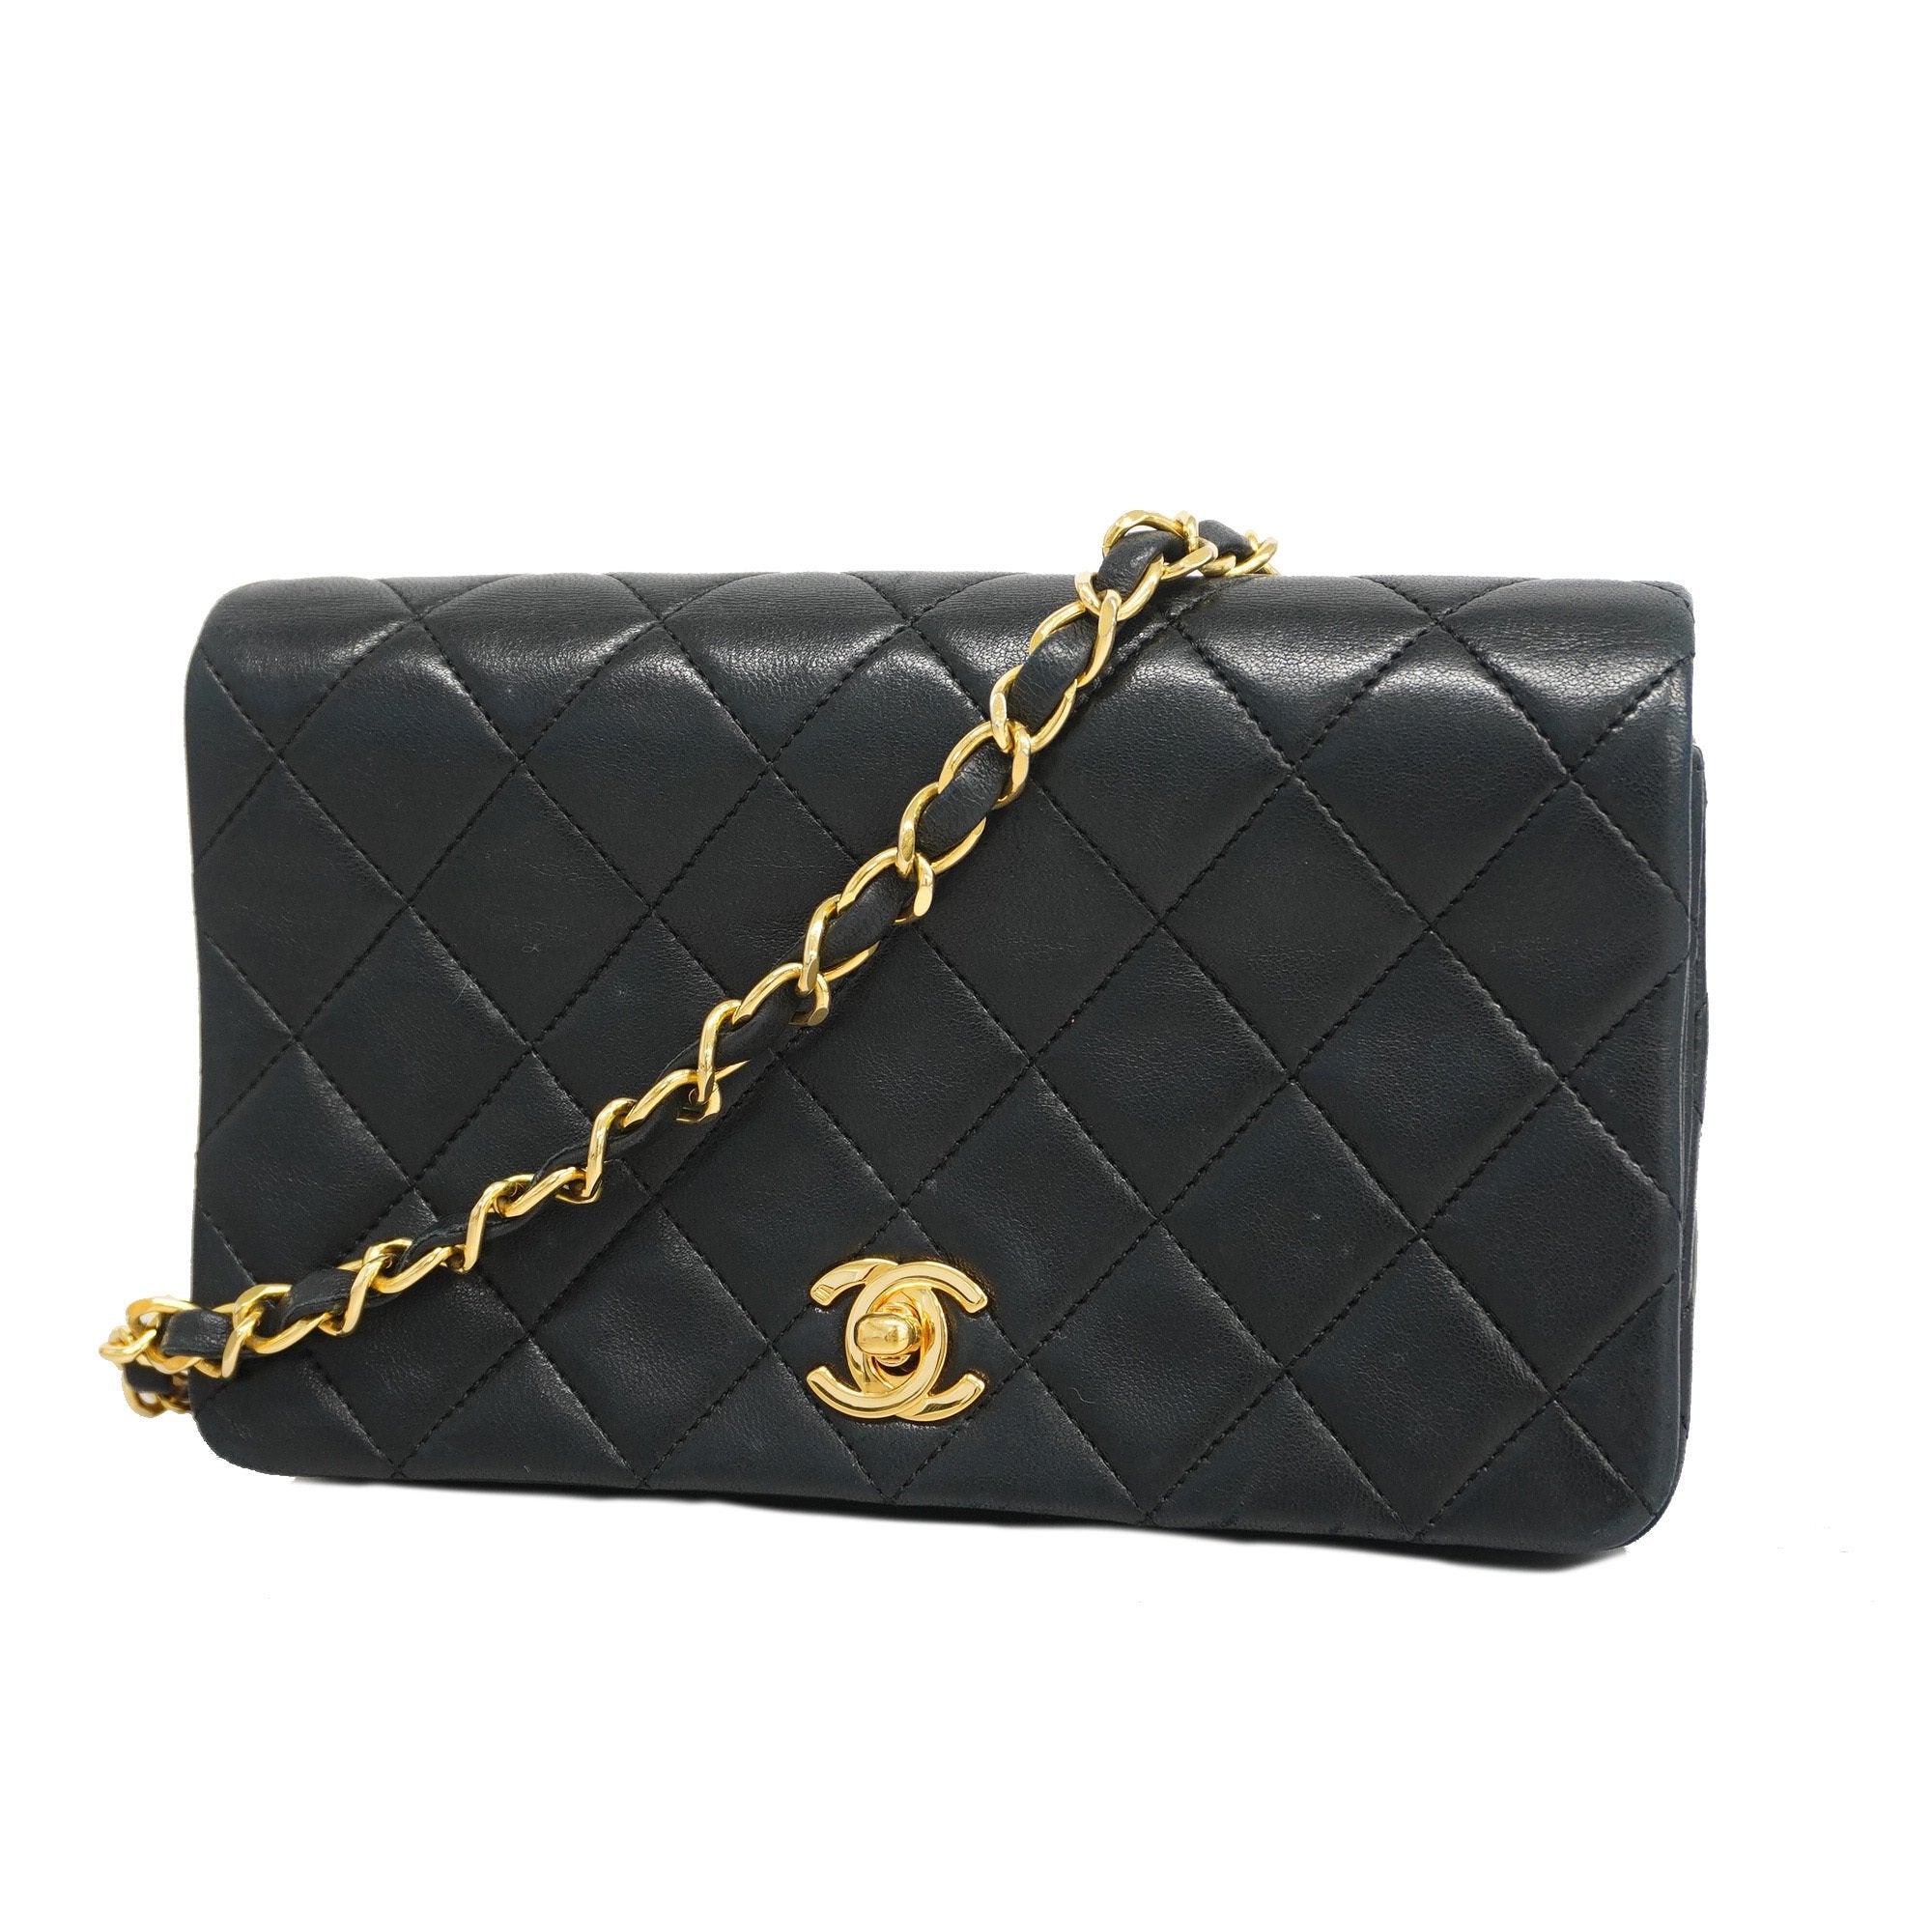 Chanel Minimatrasse Single Chain Women's Leather Shoulder Bag Black